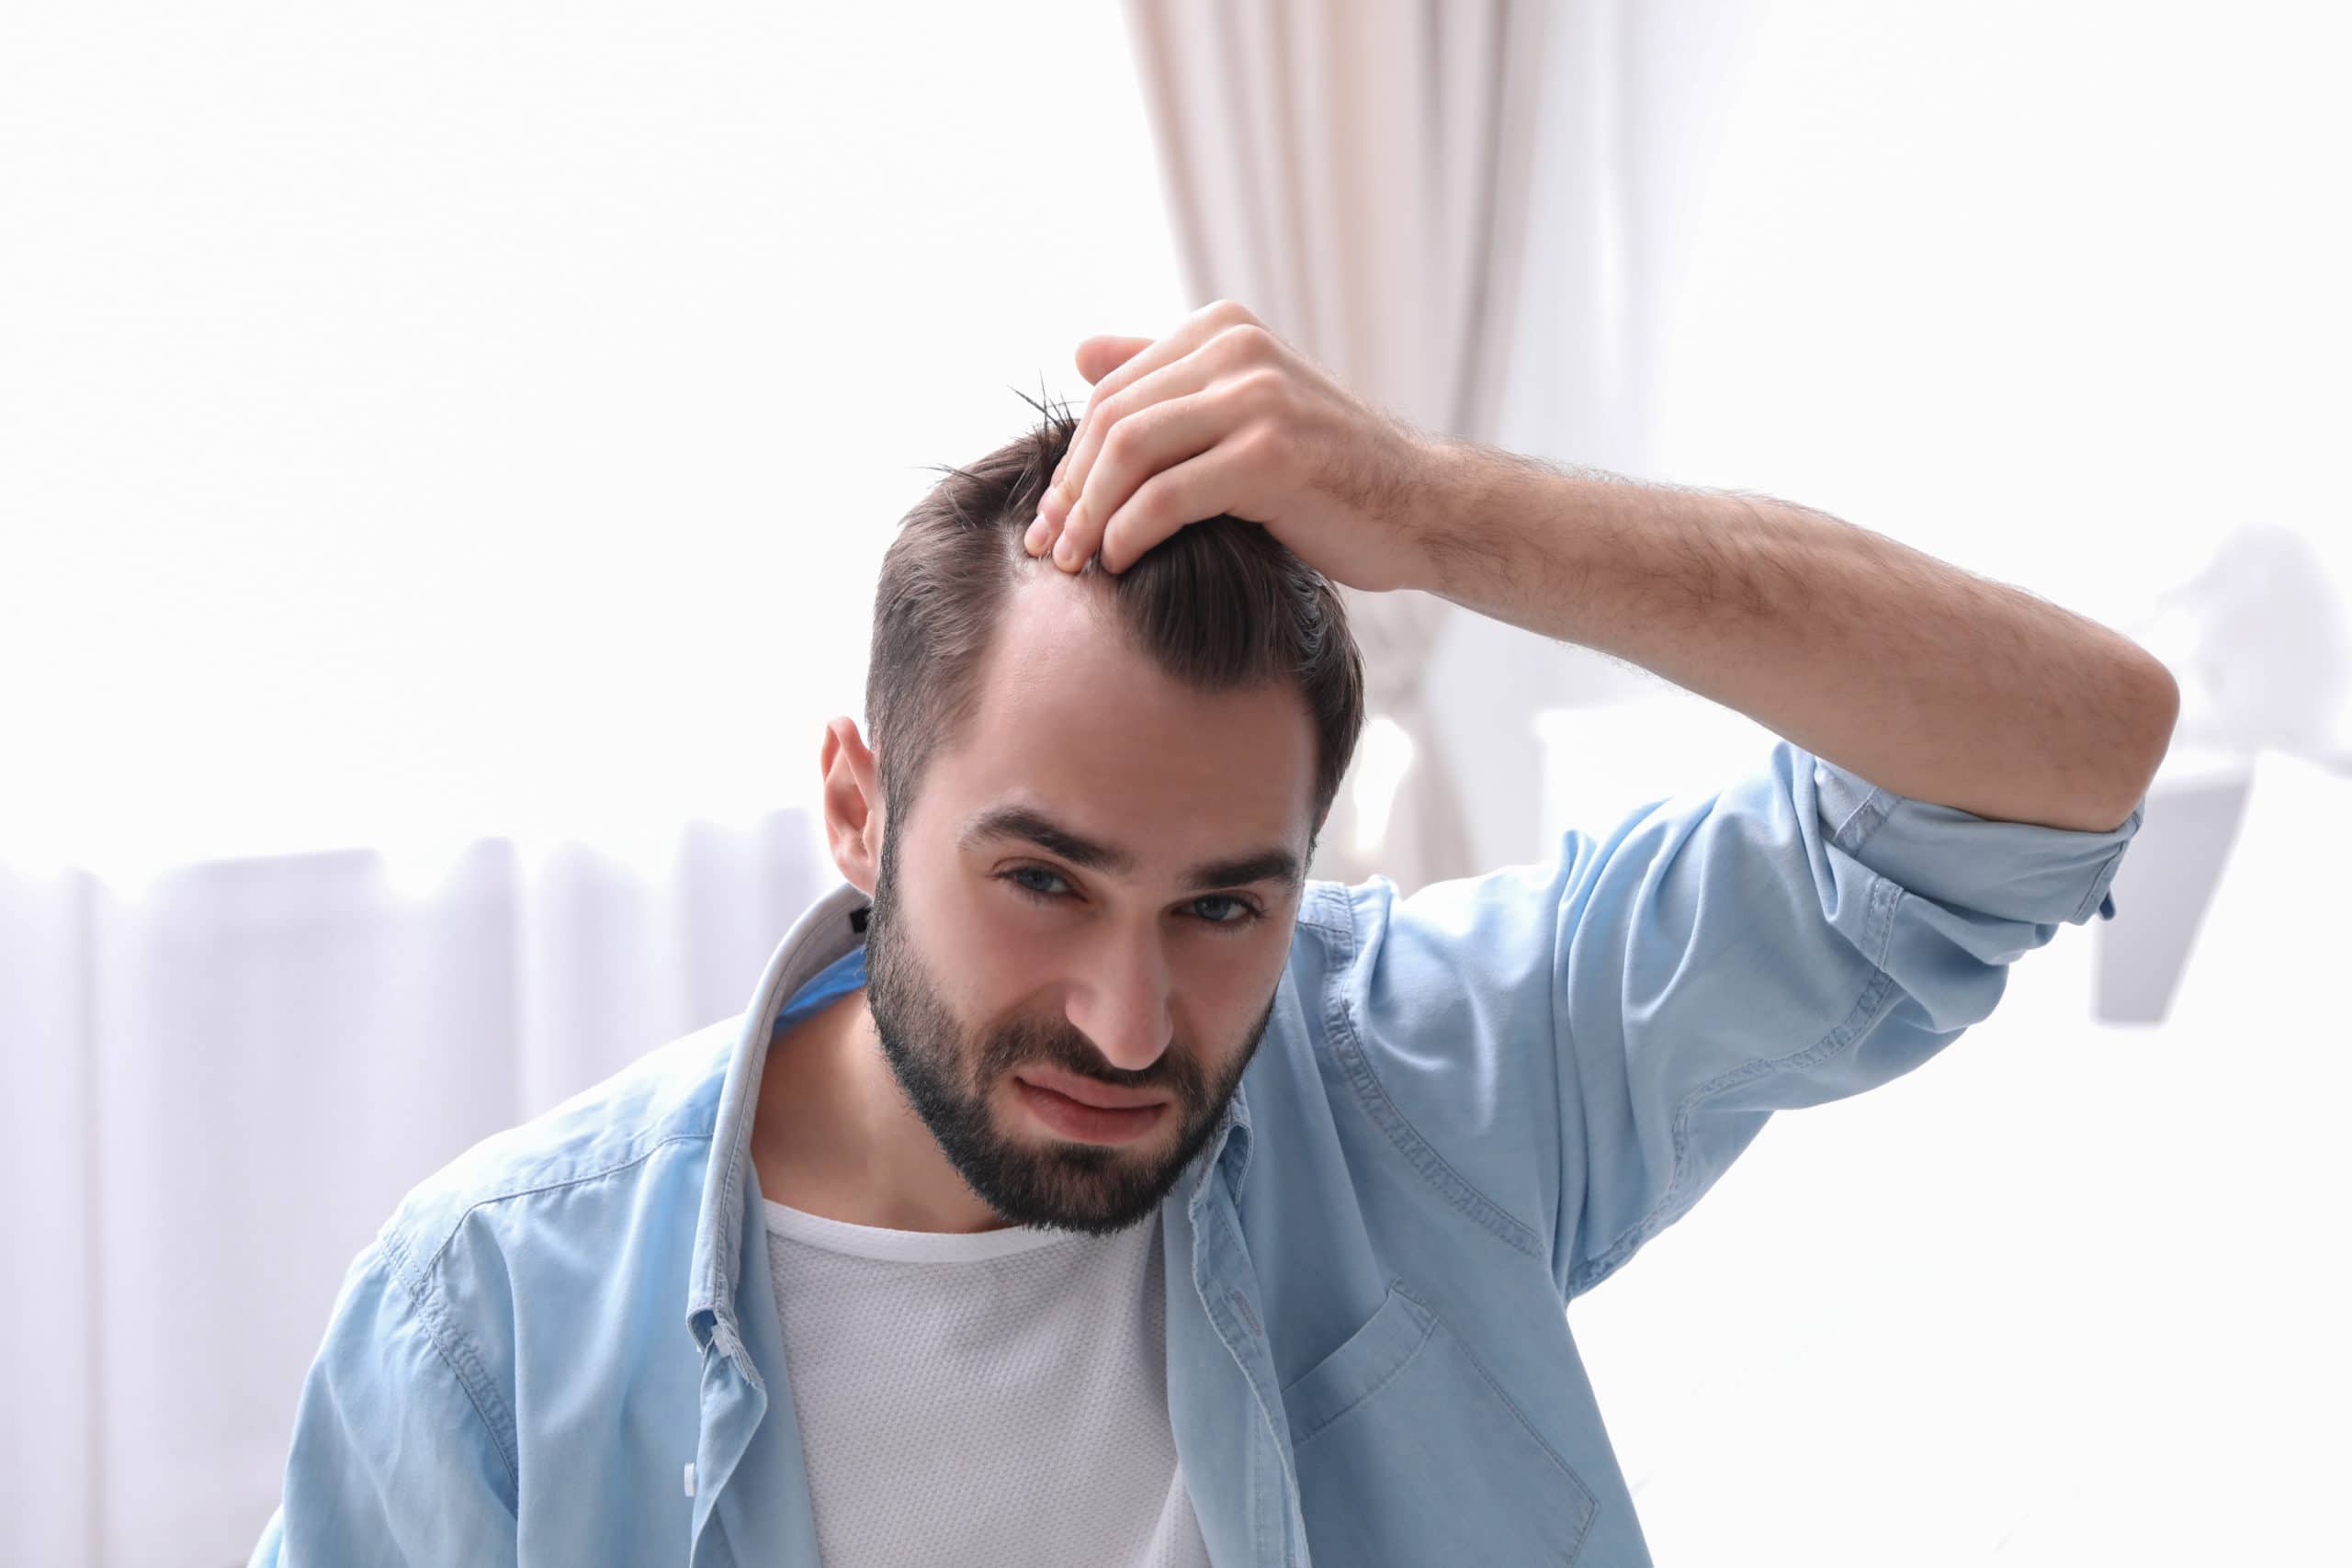 Are hair transplants safe